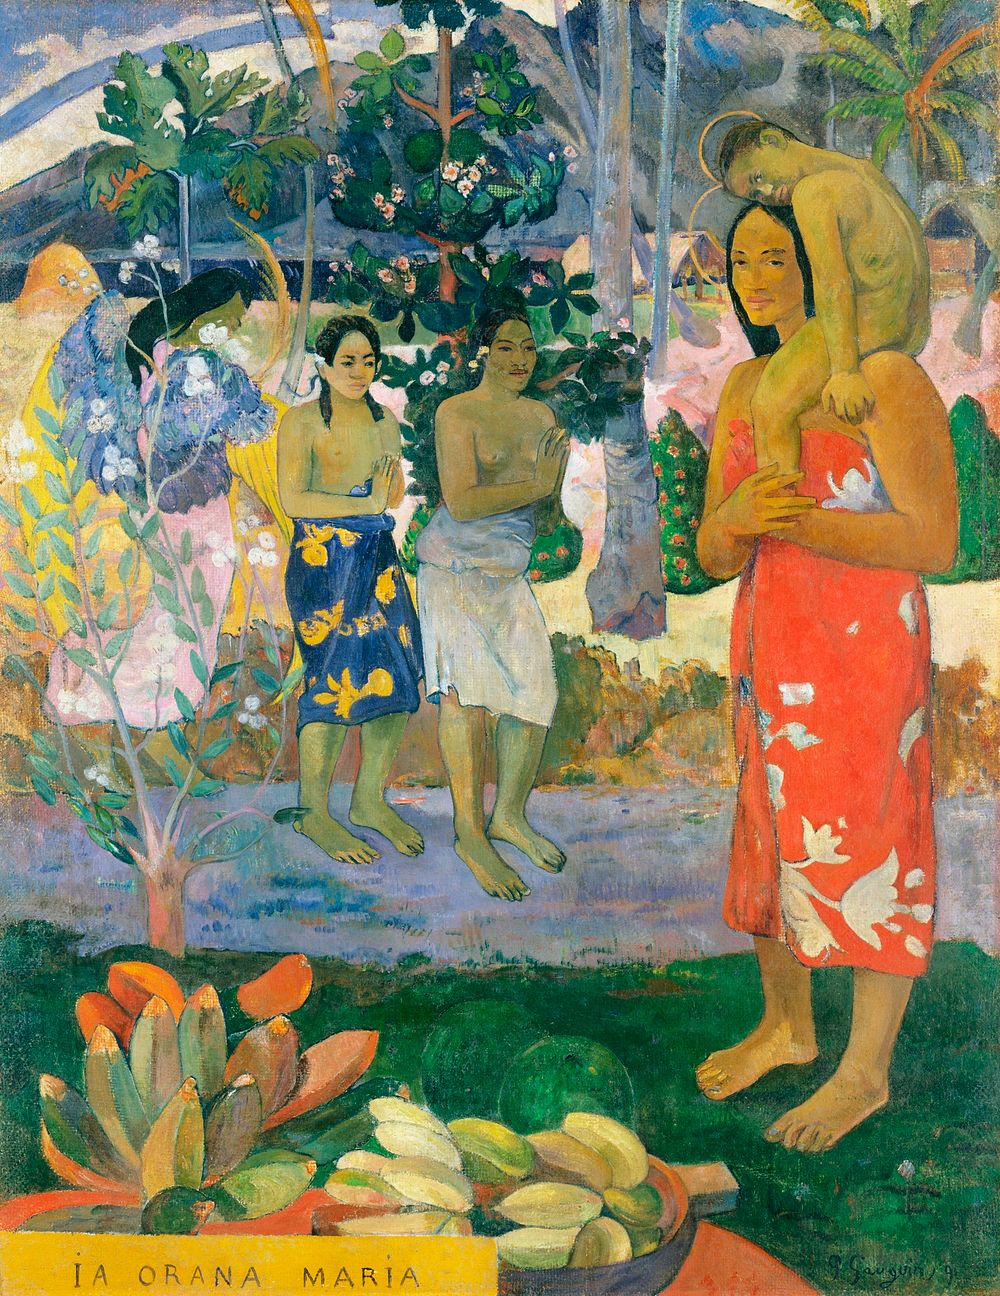 Hail Mary (Ia Orana Maria) (1891) by Paul Gauguin. Original from The MET Museum. Digitally enhanced by rawpixel.